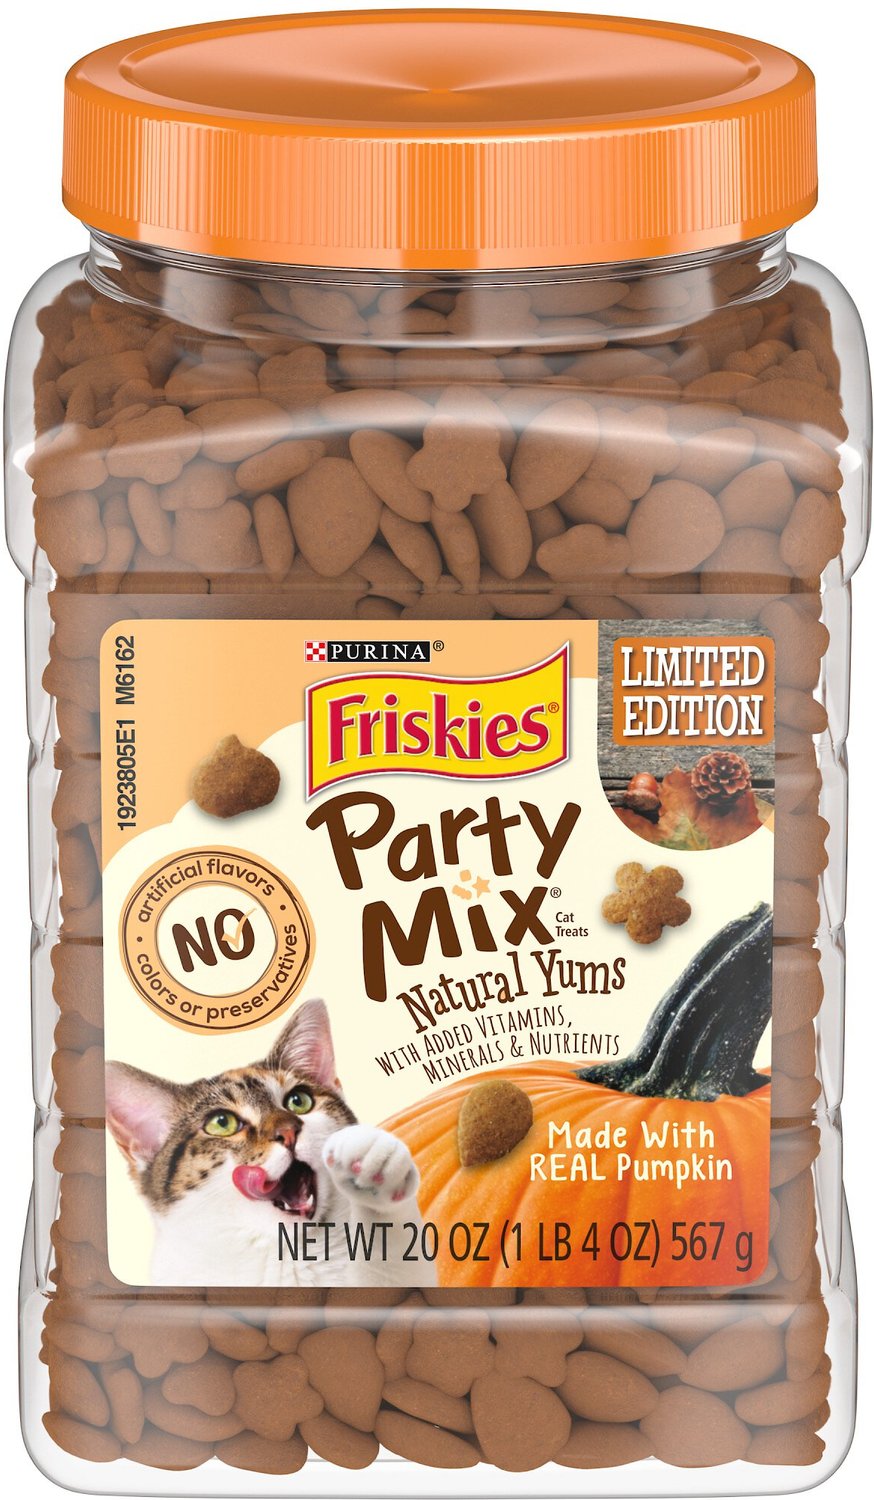 Friskies Party Mix Natural Yums Pumpkin Flavor Cat Treats ...